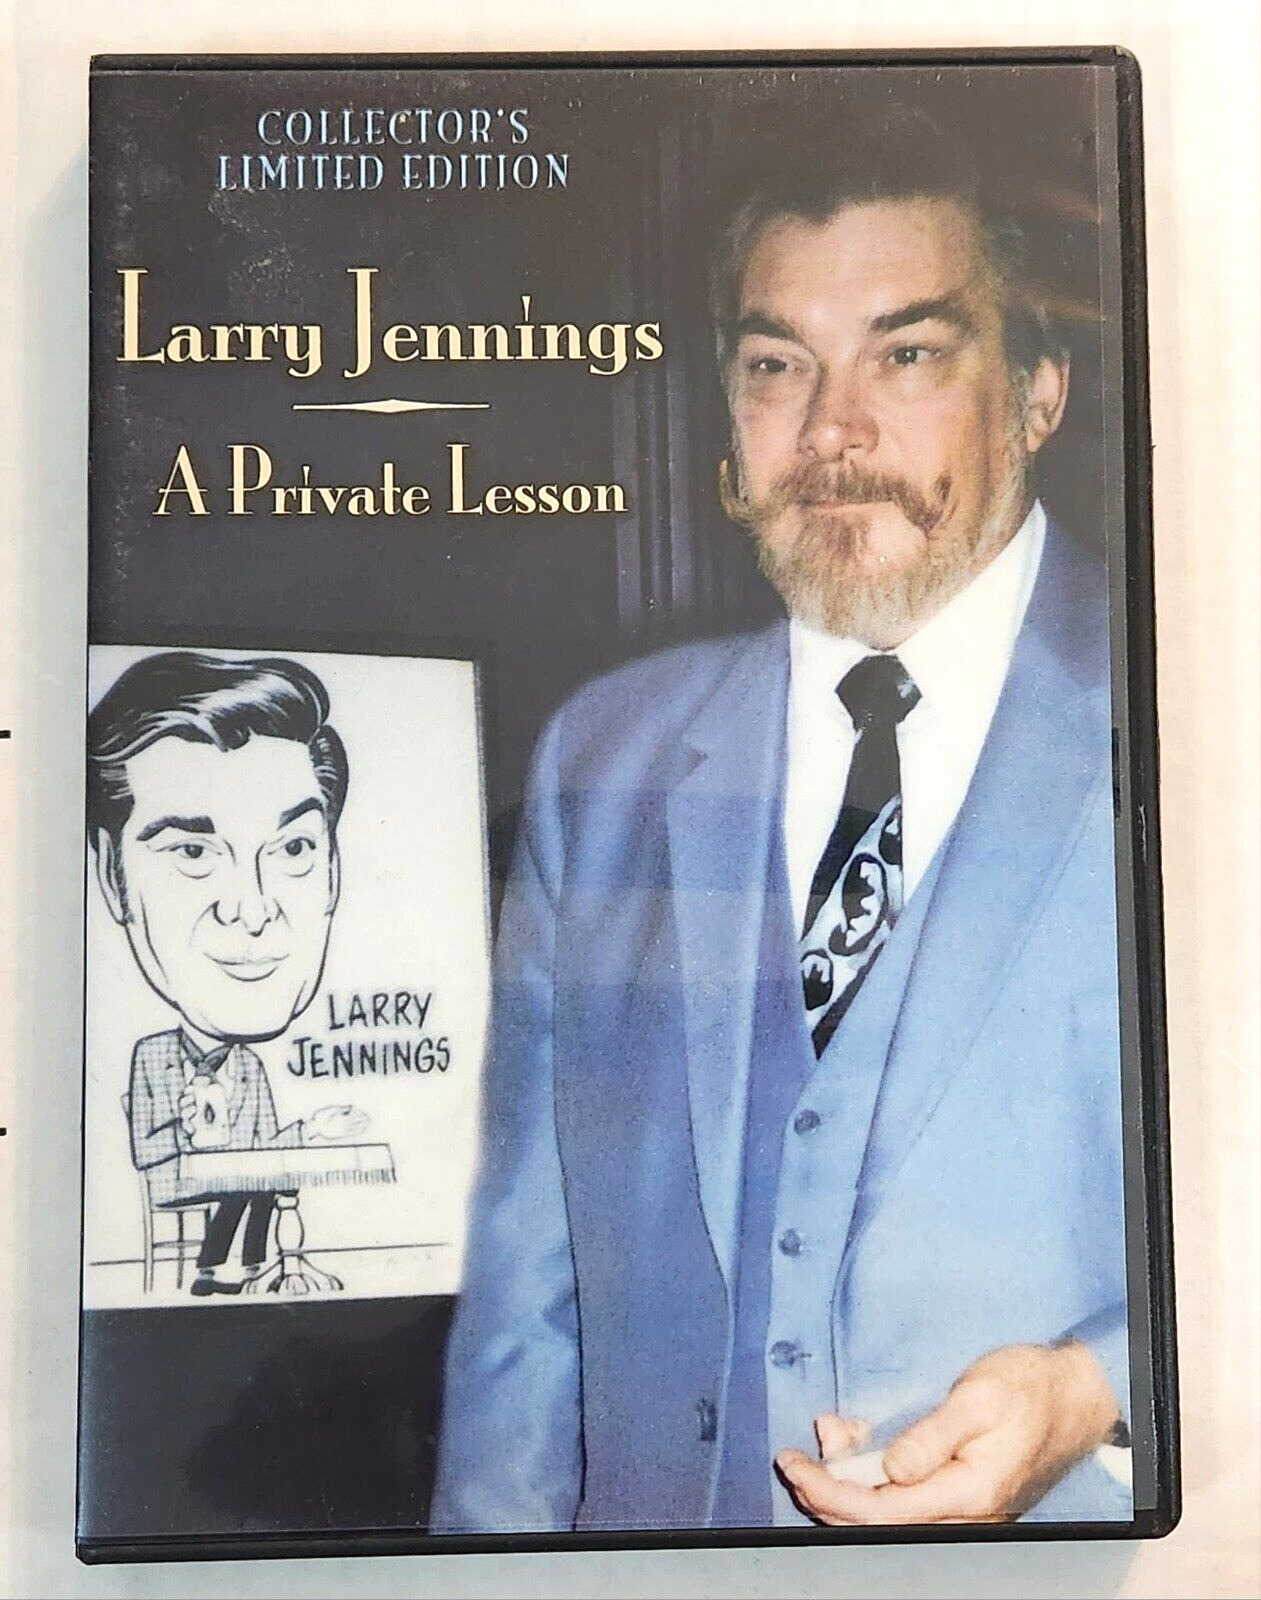 HUGE MAGIC COLLECTION SALE:  Larry Jennings - A Private Lesson - RARE unique DVD